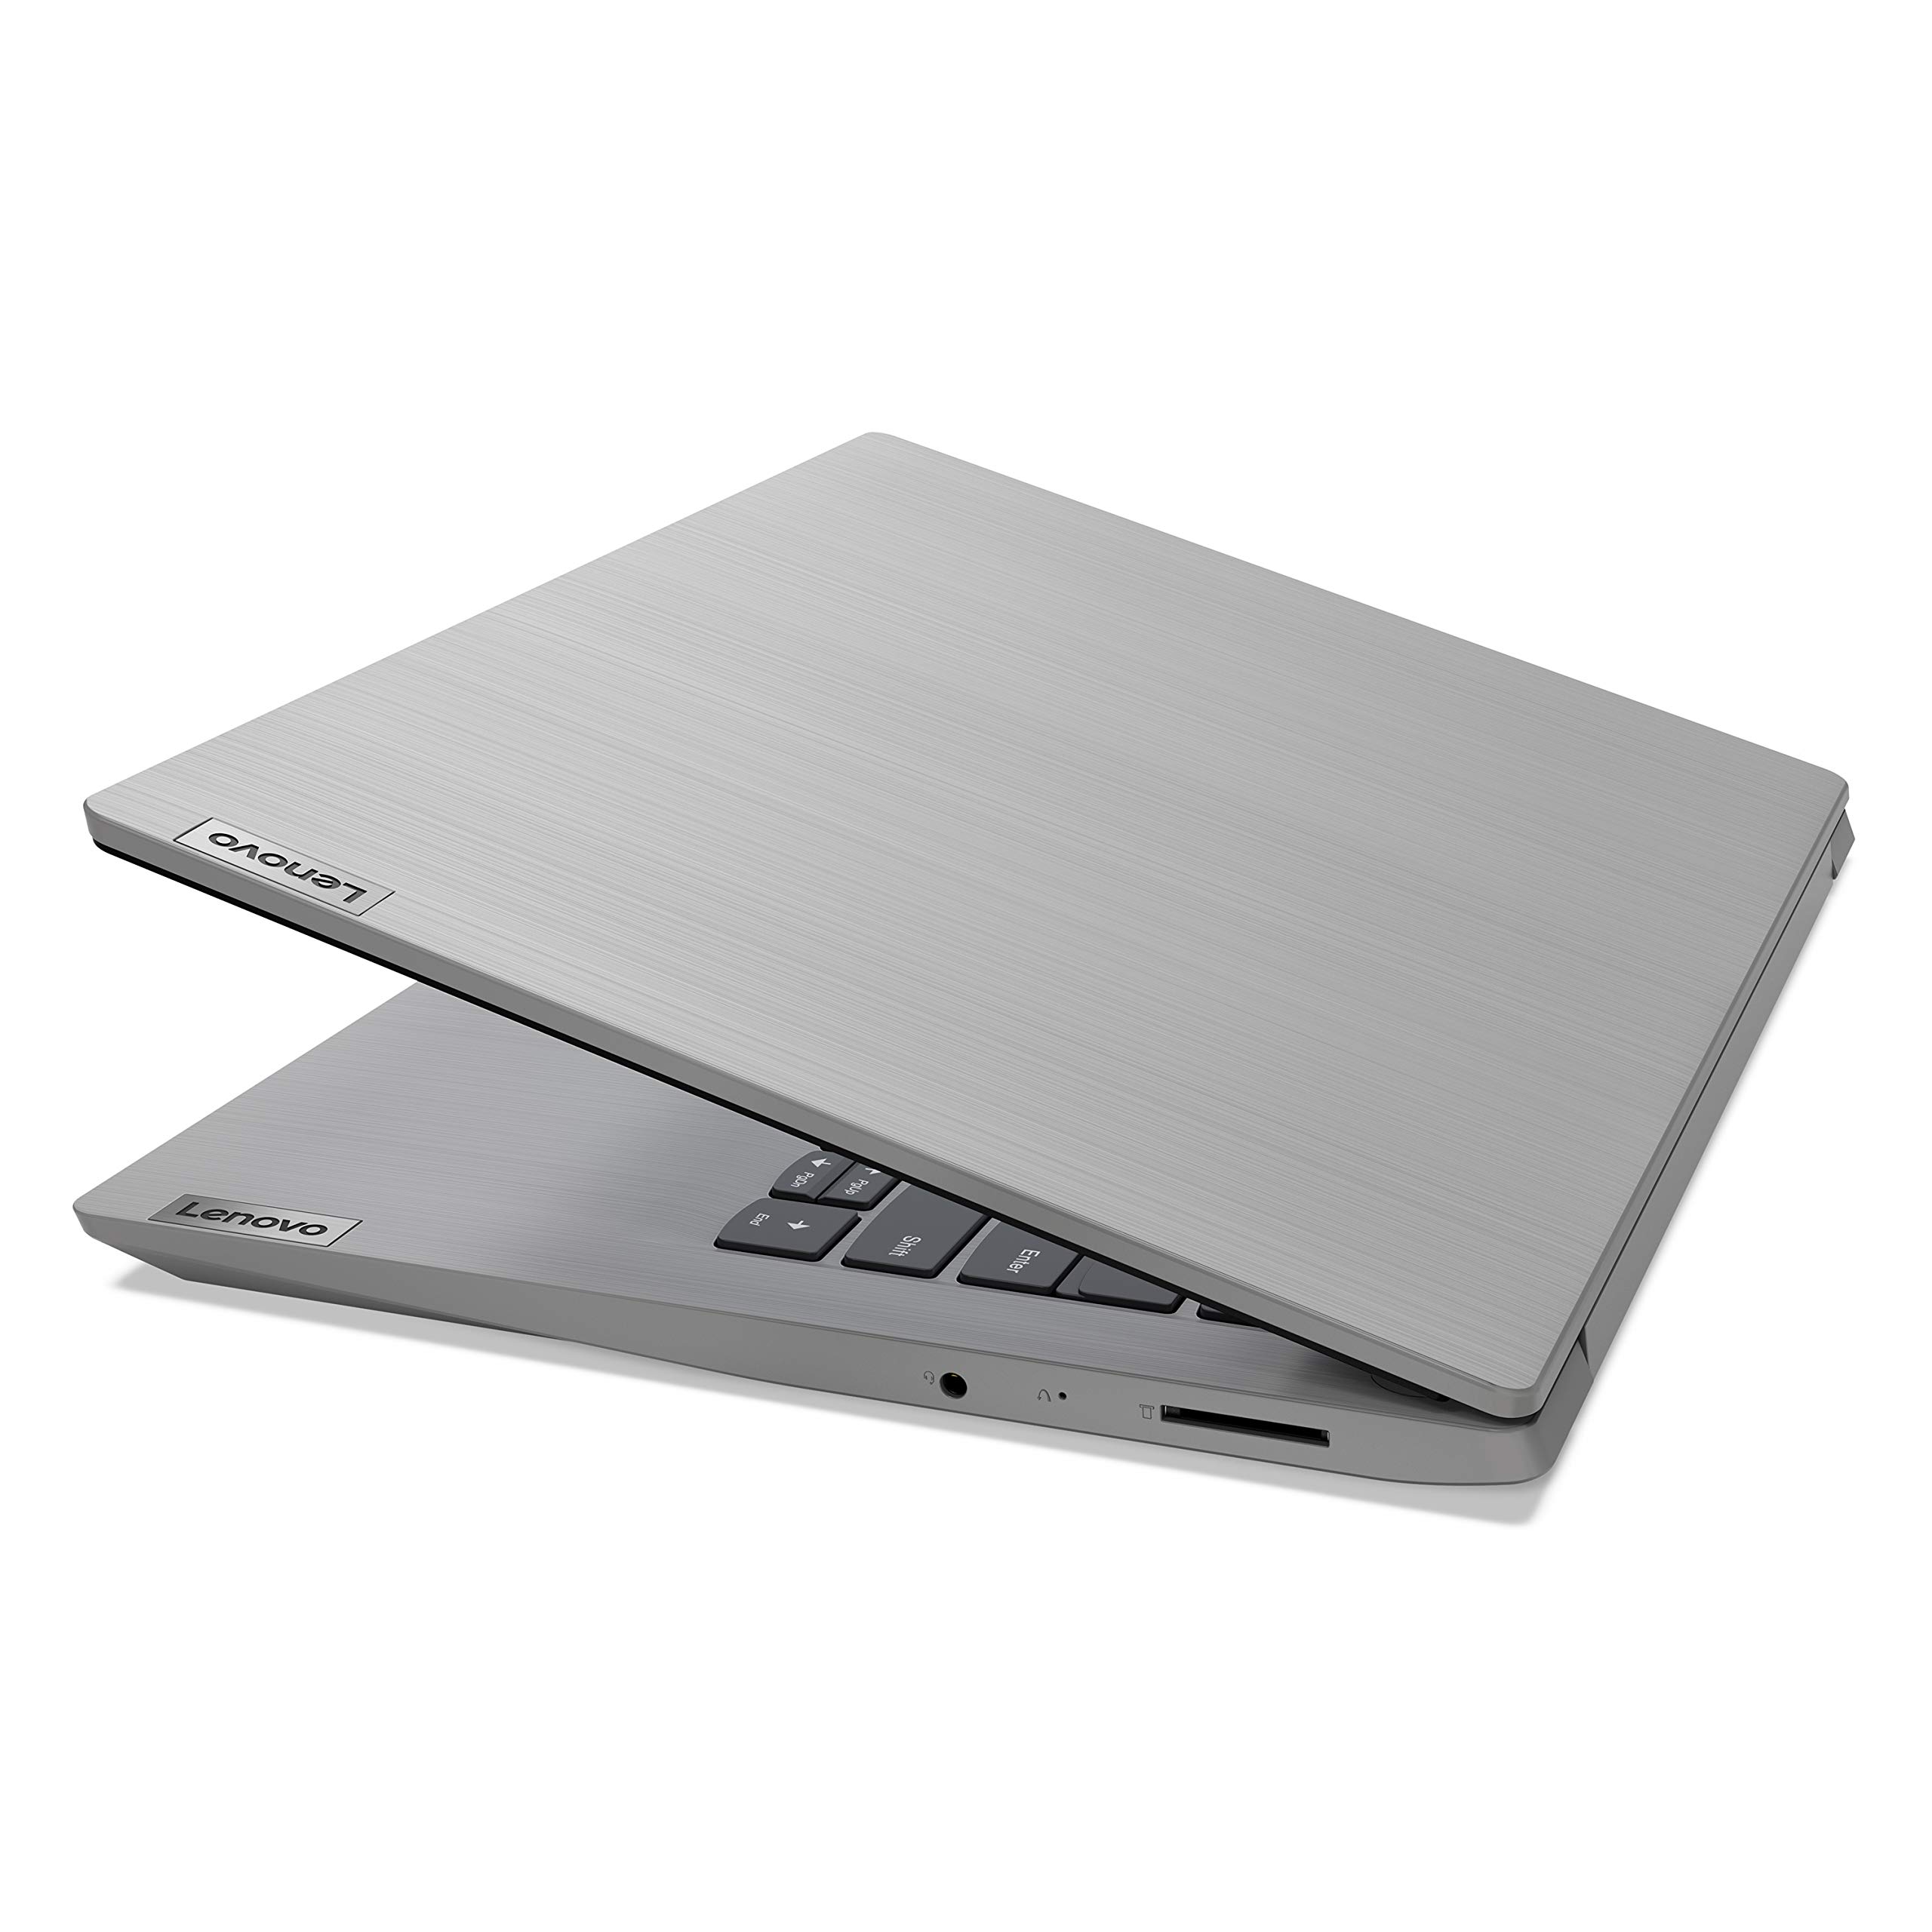 Lenovo IdeaPad 3 14 Laptop, Intel Core i3-1005G1, 4GB RAM, 128GB Storage, 14.0